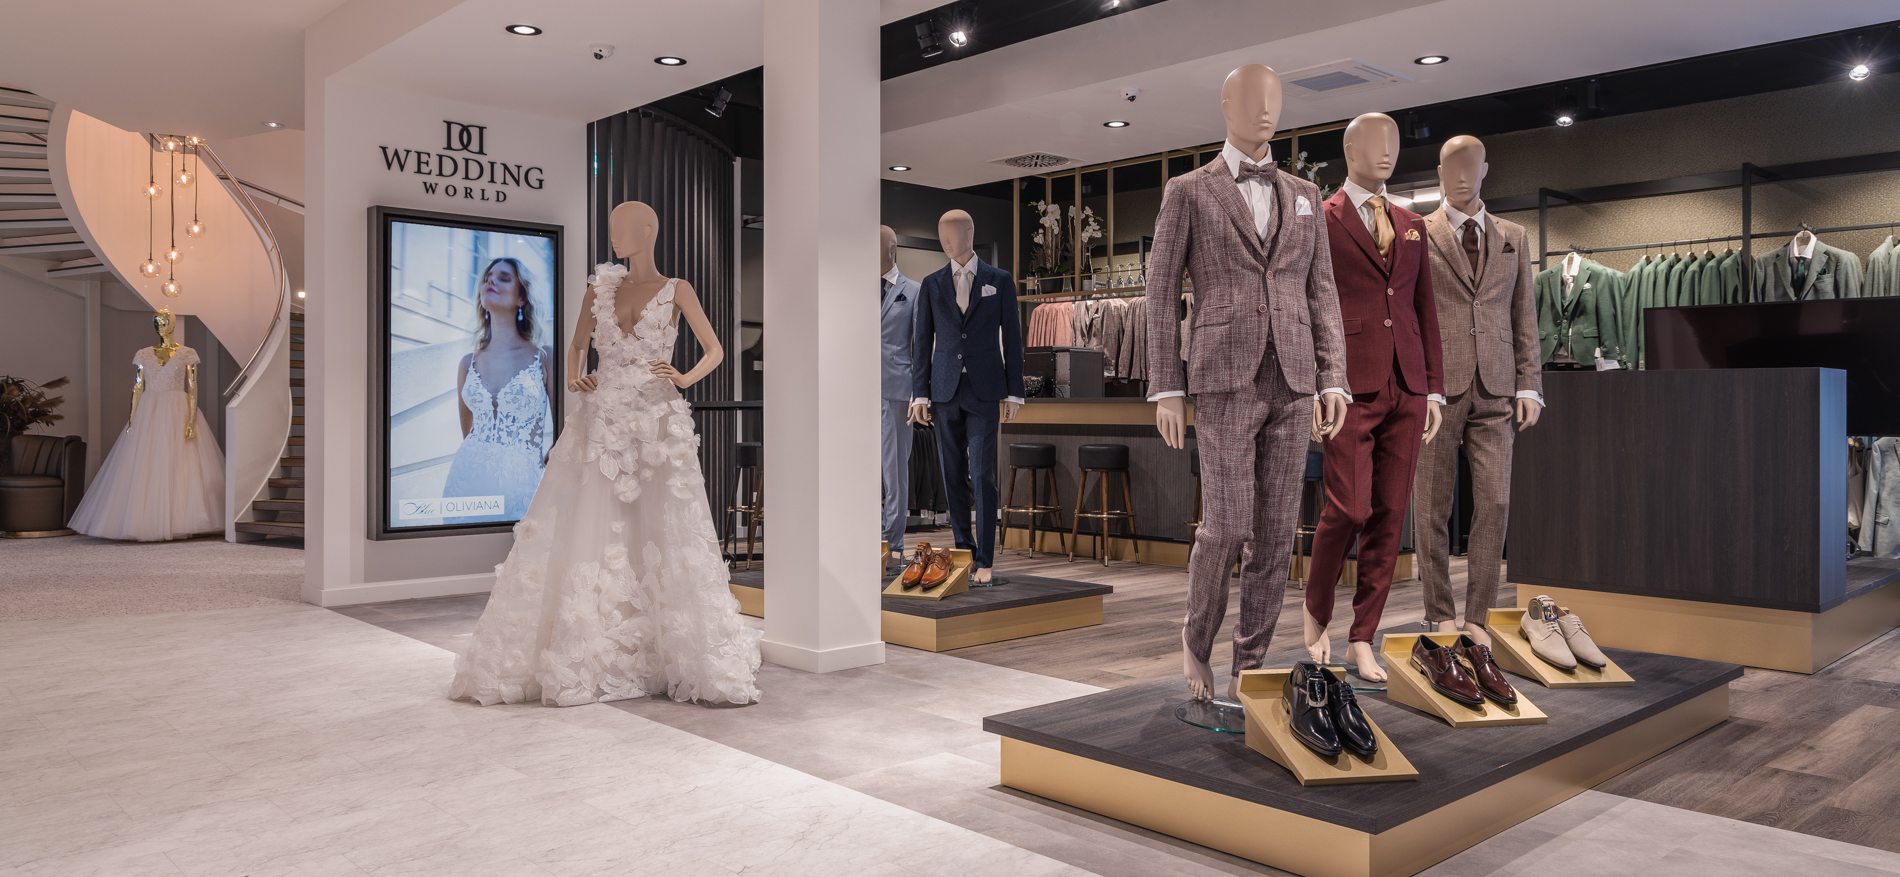 Wedding World bruidswinkel | Oberhausen (DE) - Fashion